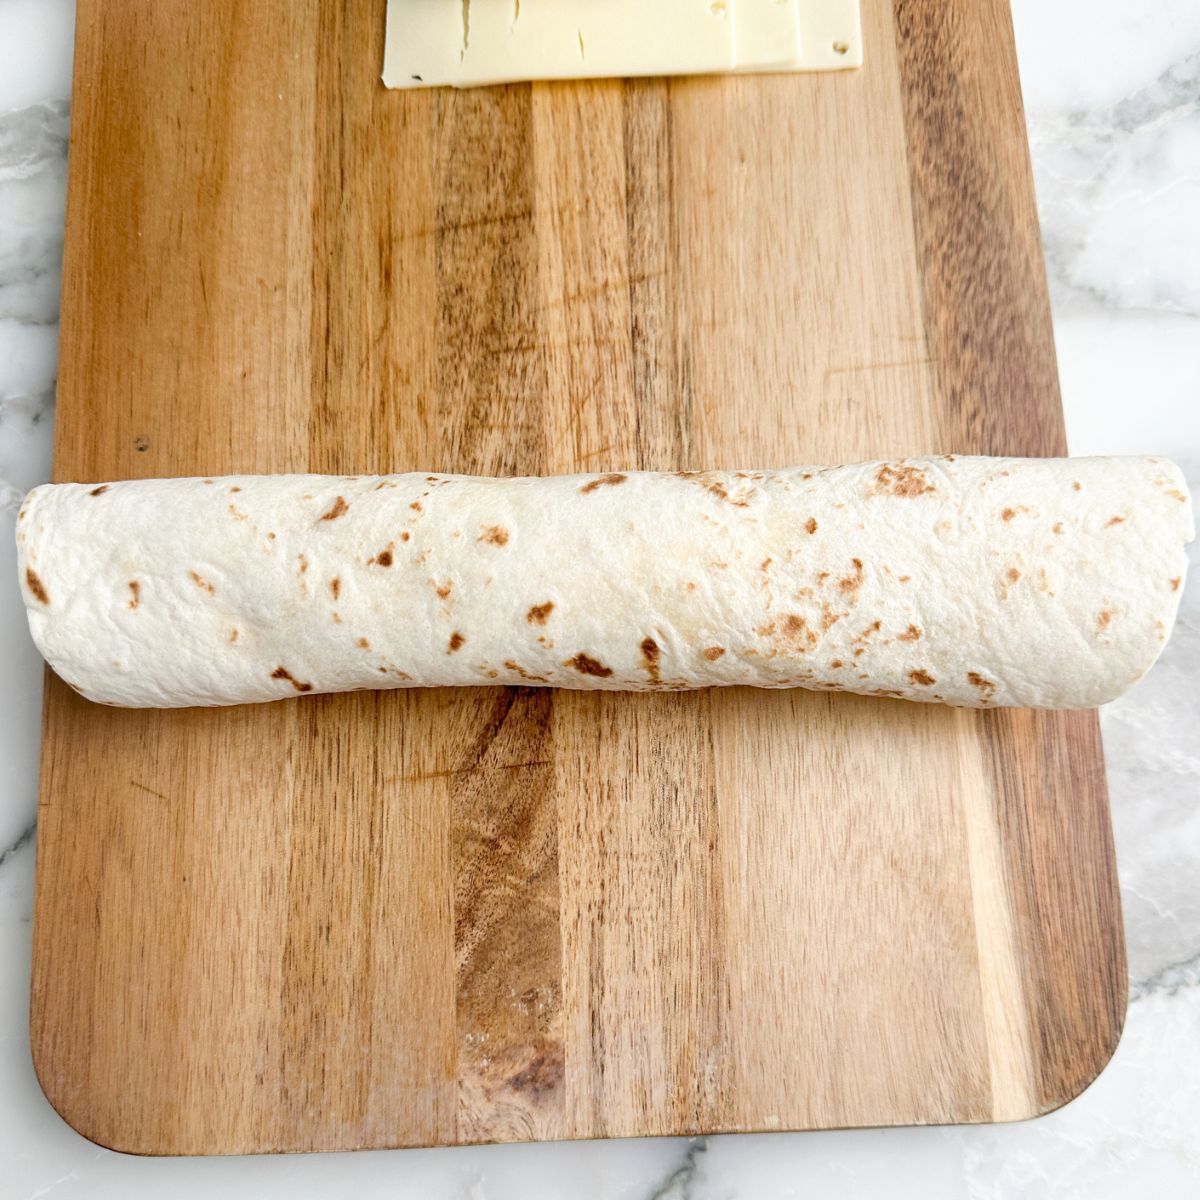 Rolled up tortilla pinwheel on a cutting board. 